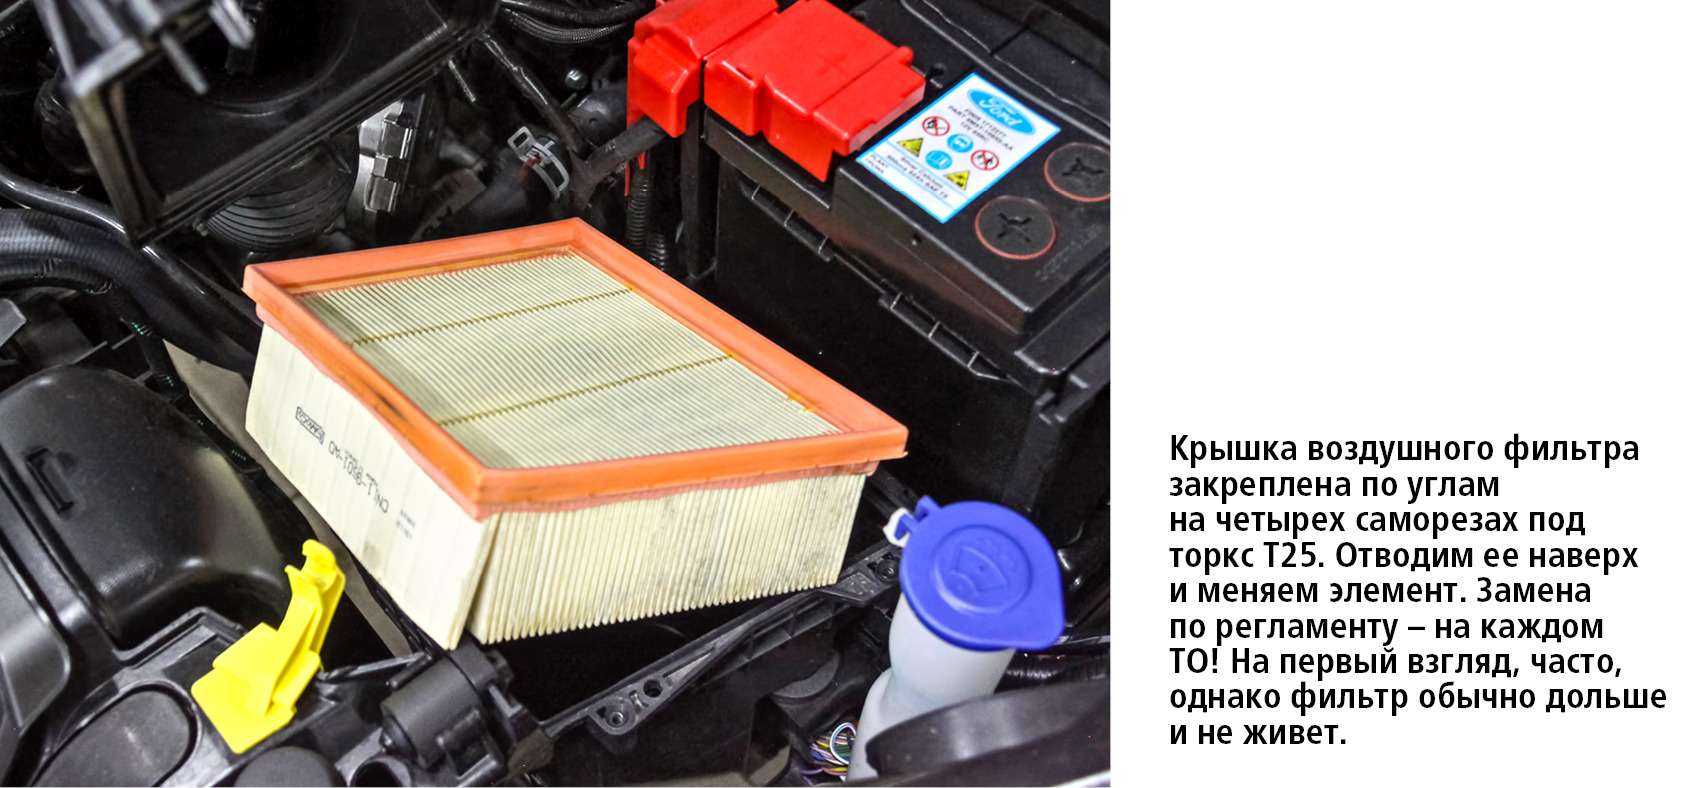 Ford Fiesta: проверка на ремонтопригодность — фото 610317